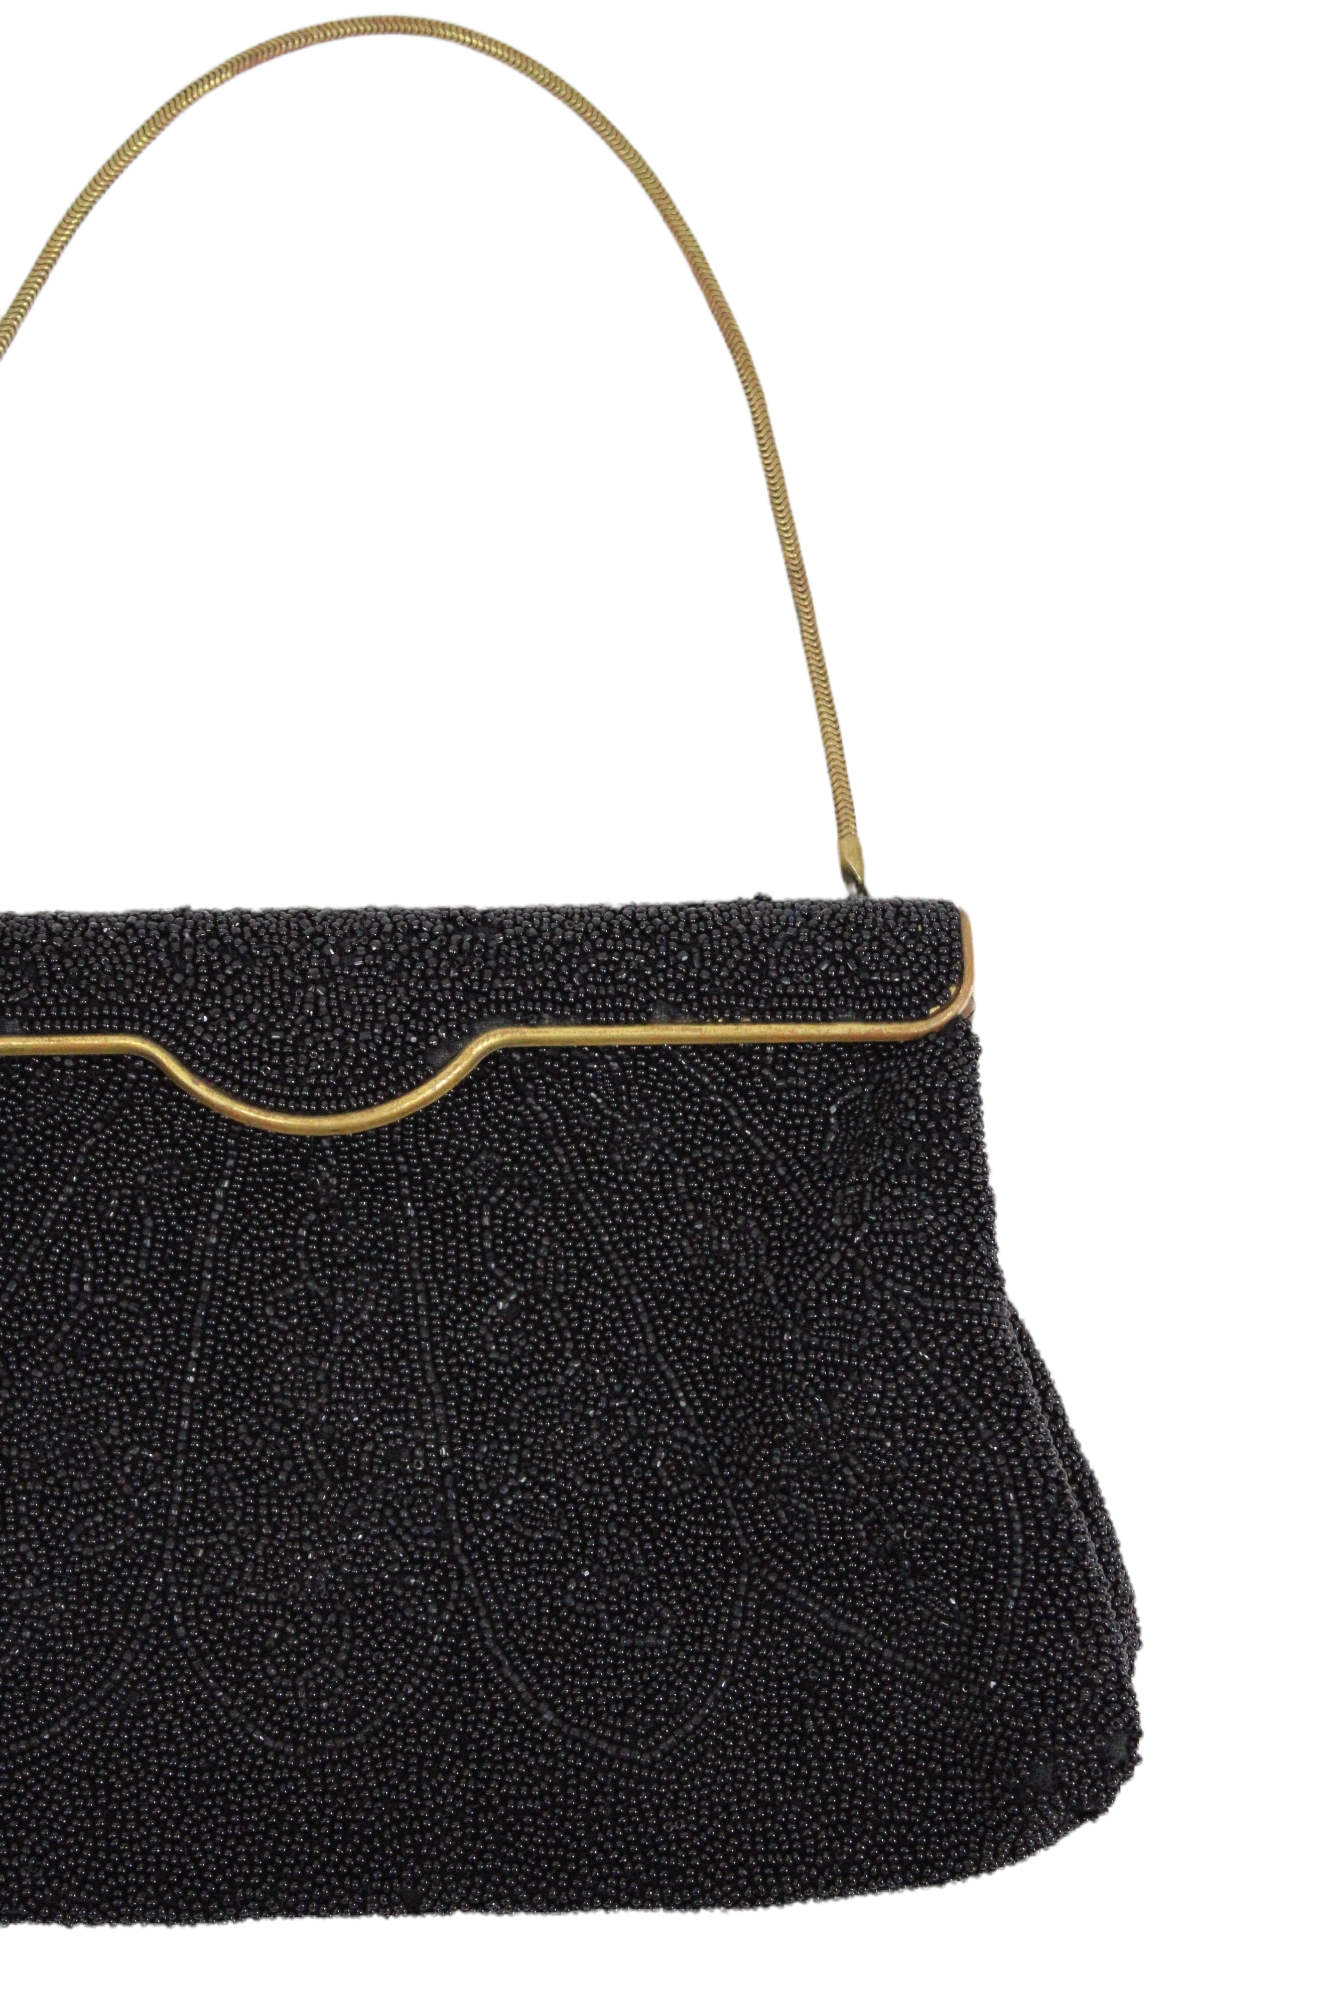 black beaded purse